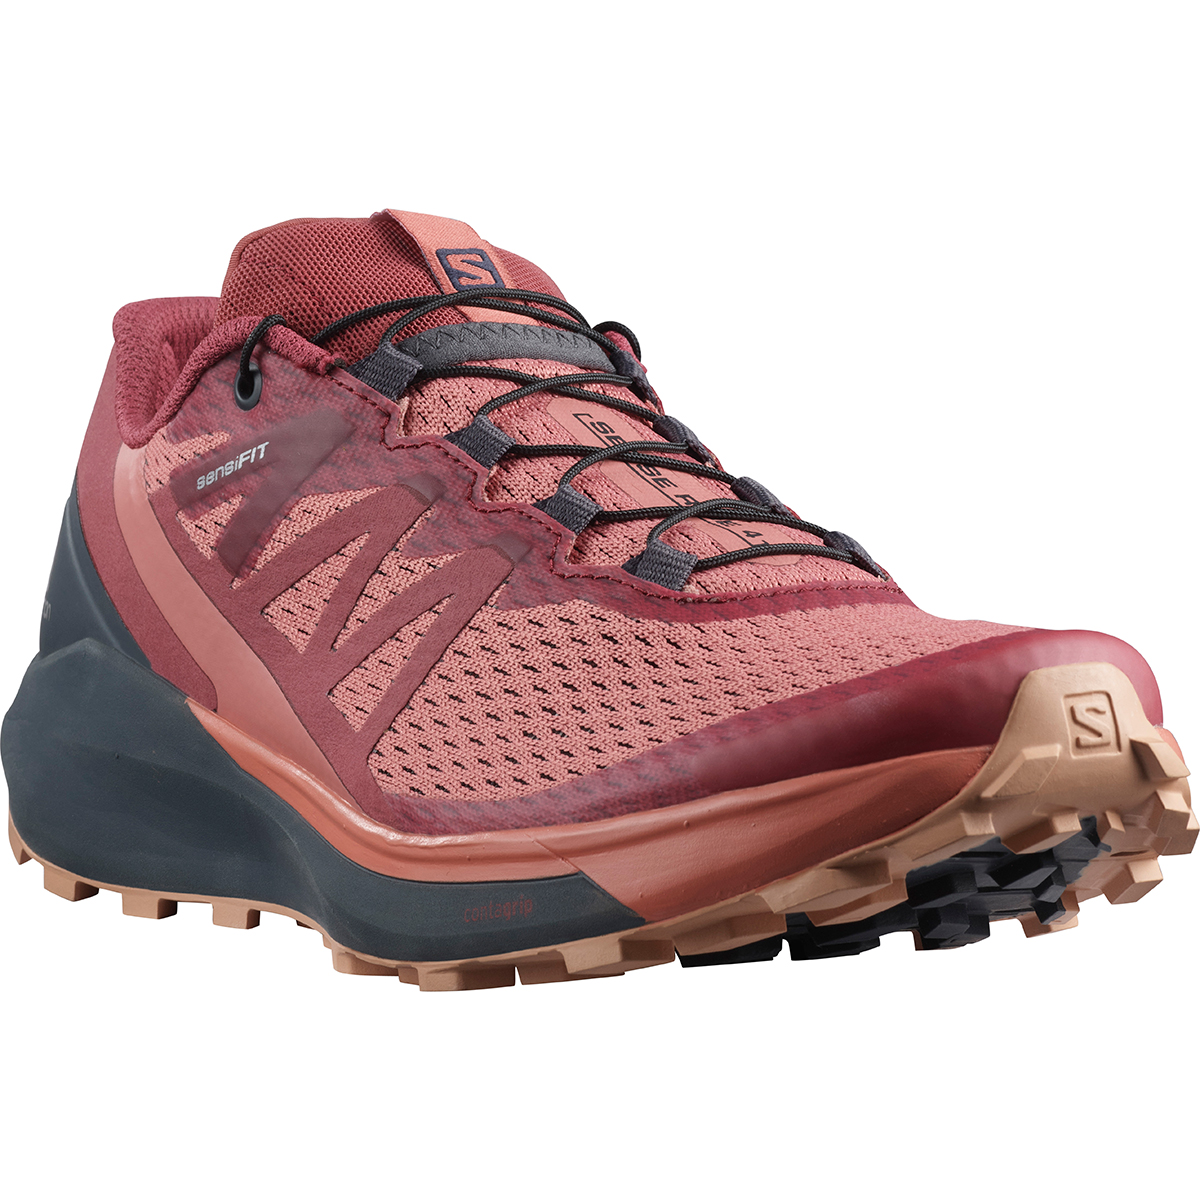 Salomon Women's Sense Ride 4 Trail Running Shoes - Size 10.5 -  L41305500